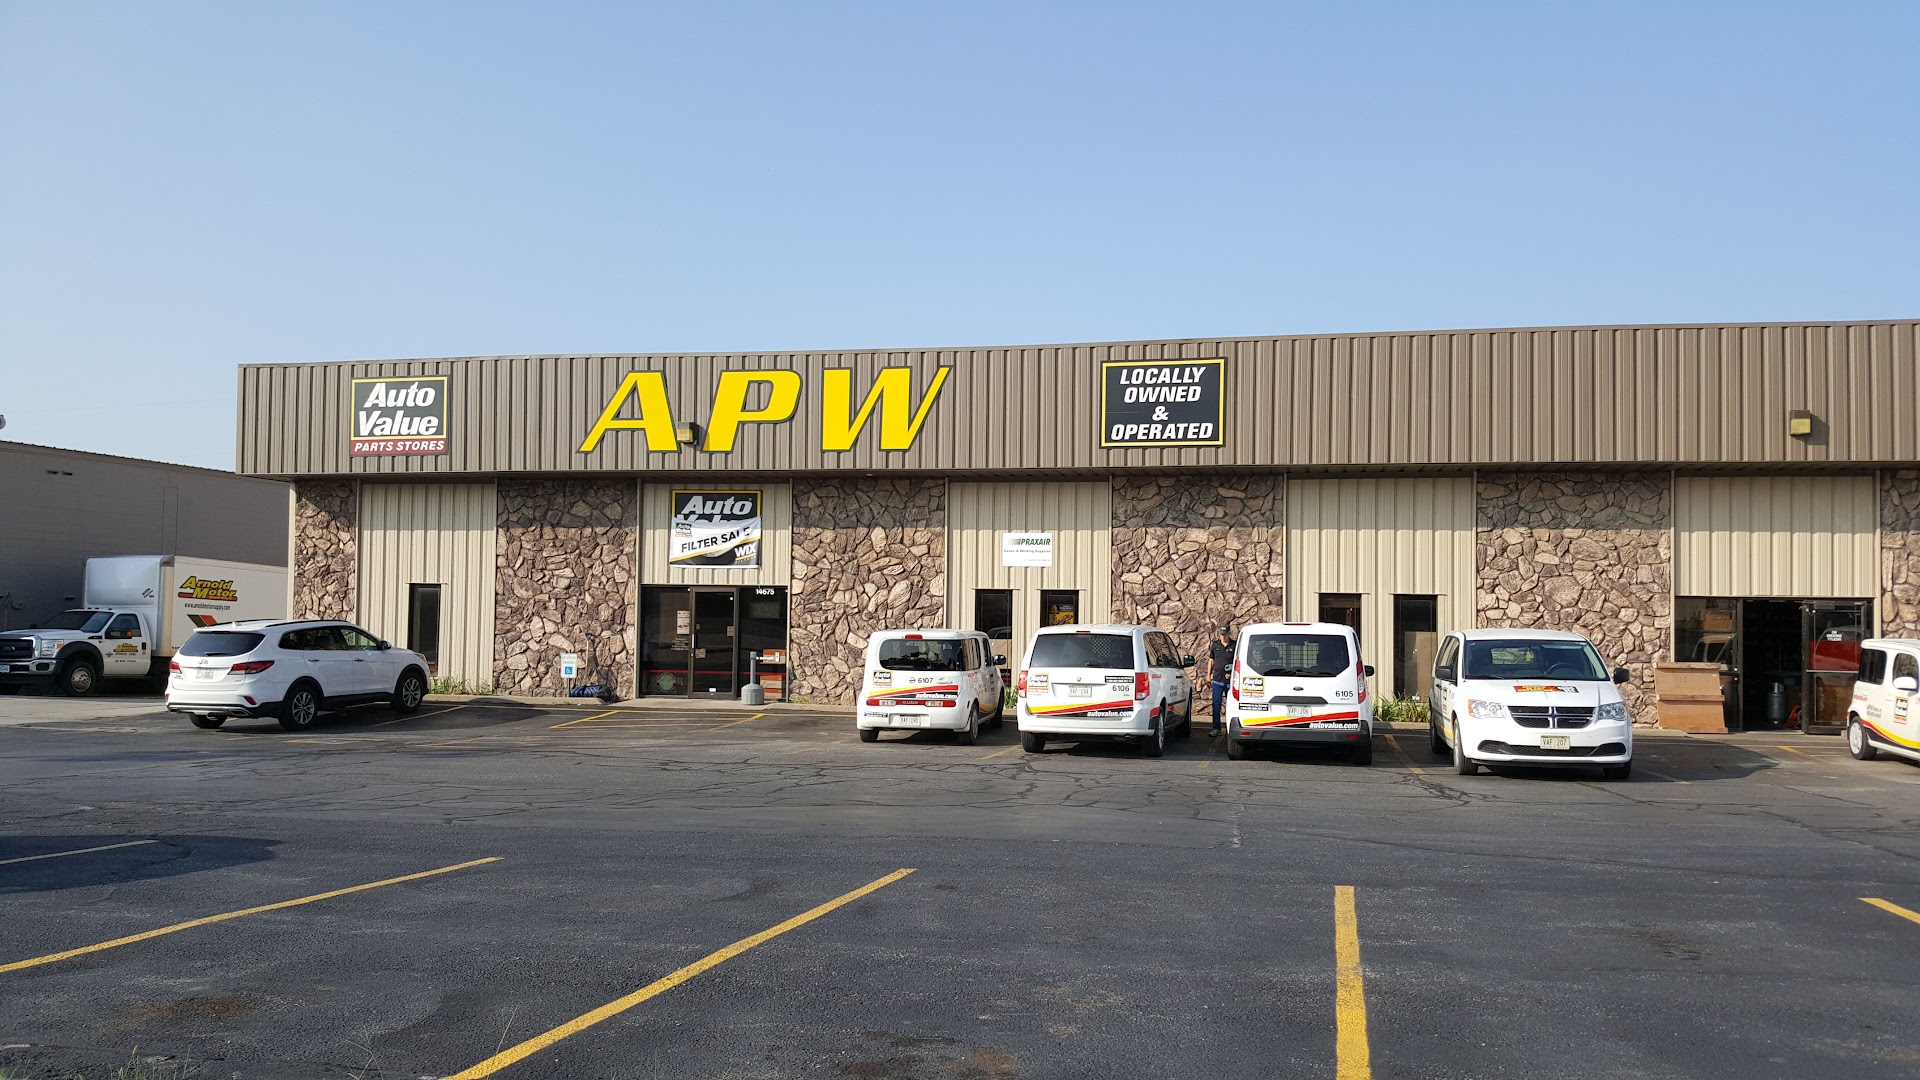 Auto parts store In Omaha NE 